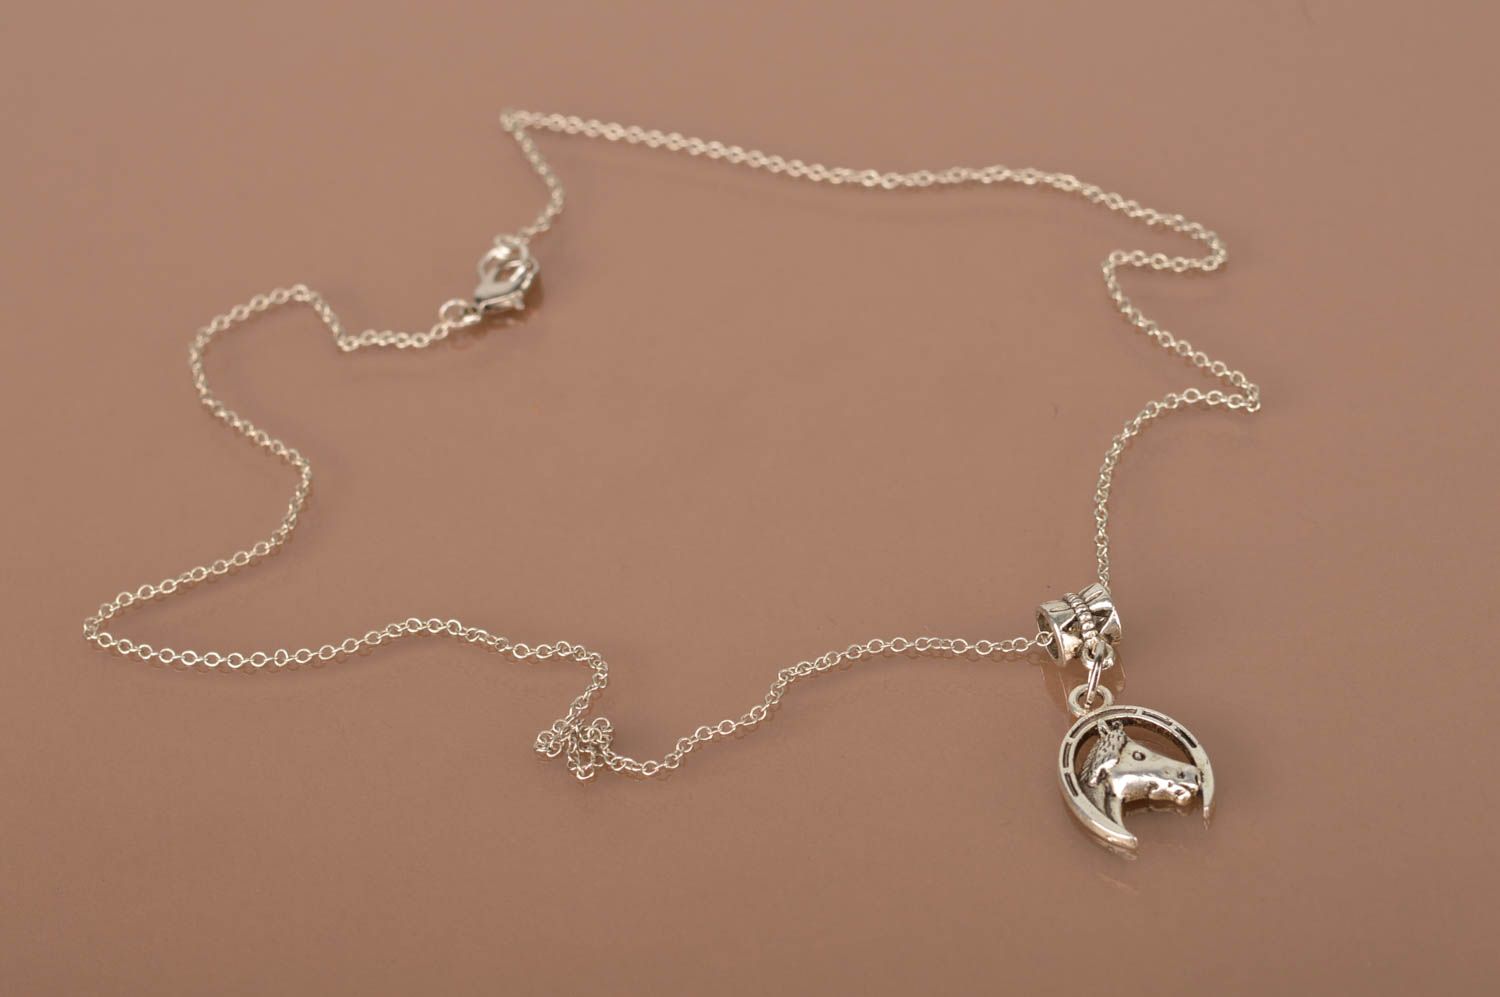 Stylish handmade metal neck pendant metal jewelry designs jewelry trends photo 3